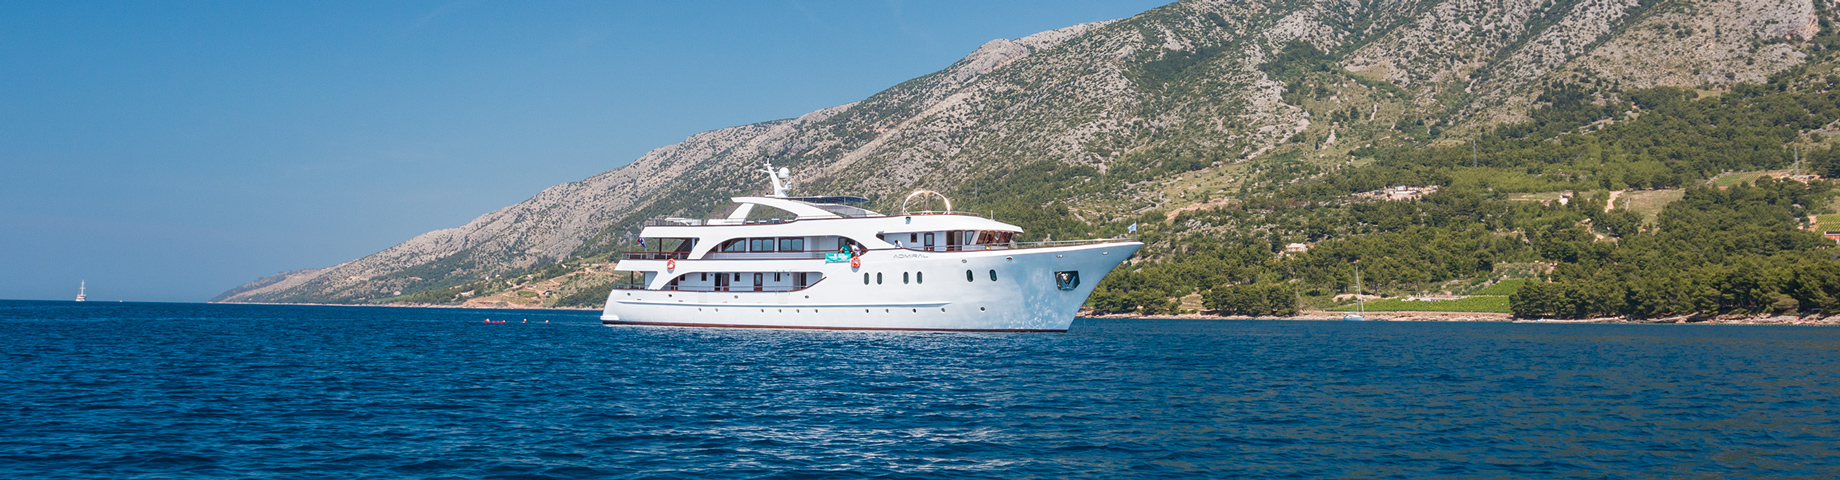 Croatia Cruises Small Yachts, Motor Yachts Cruises